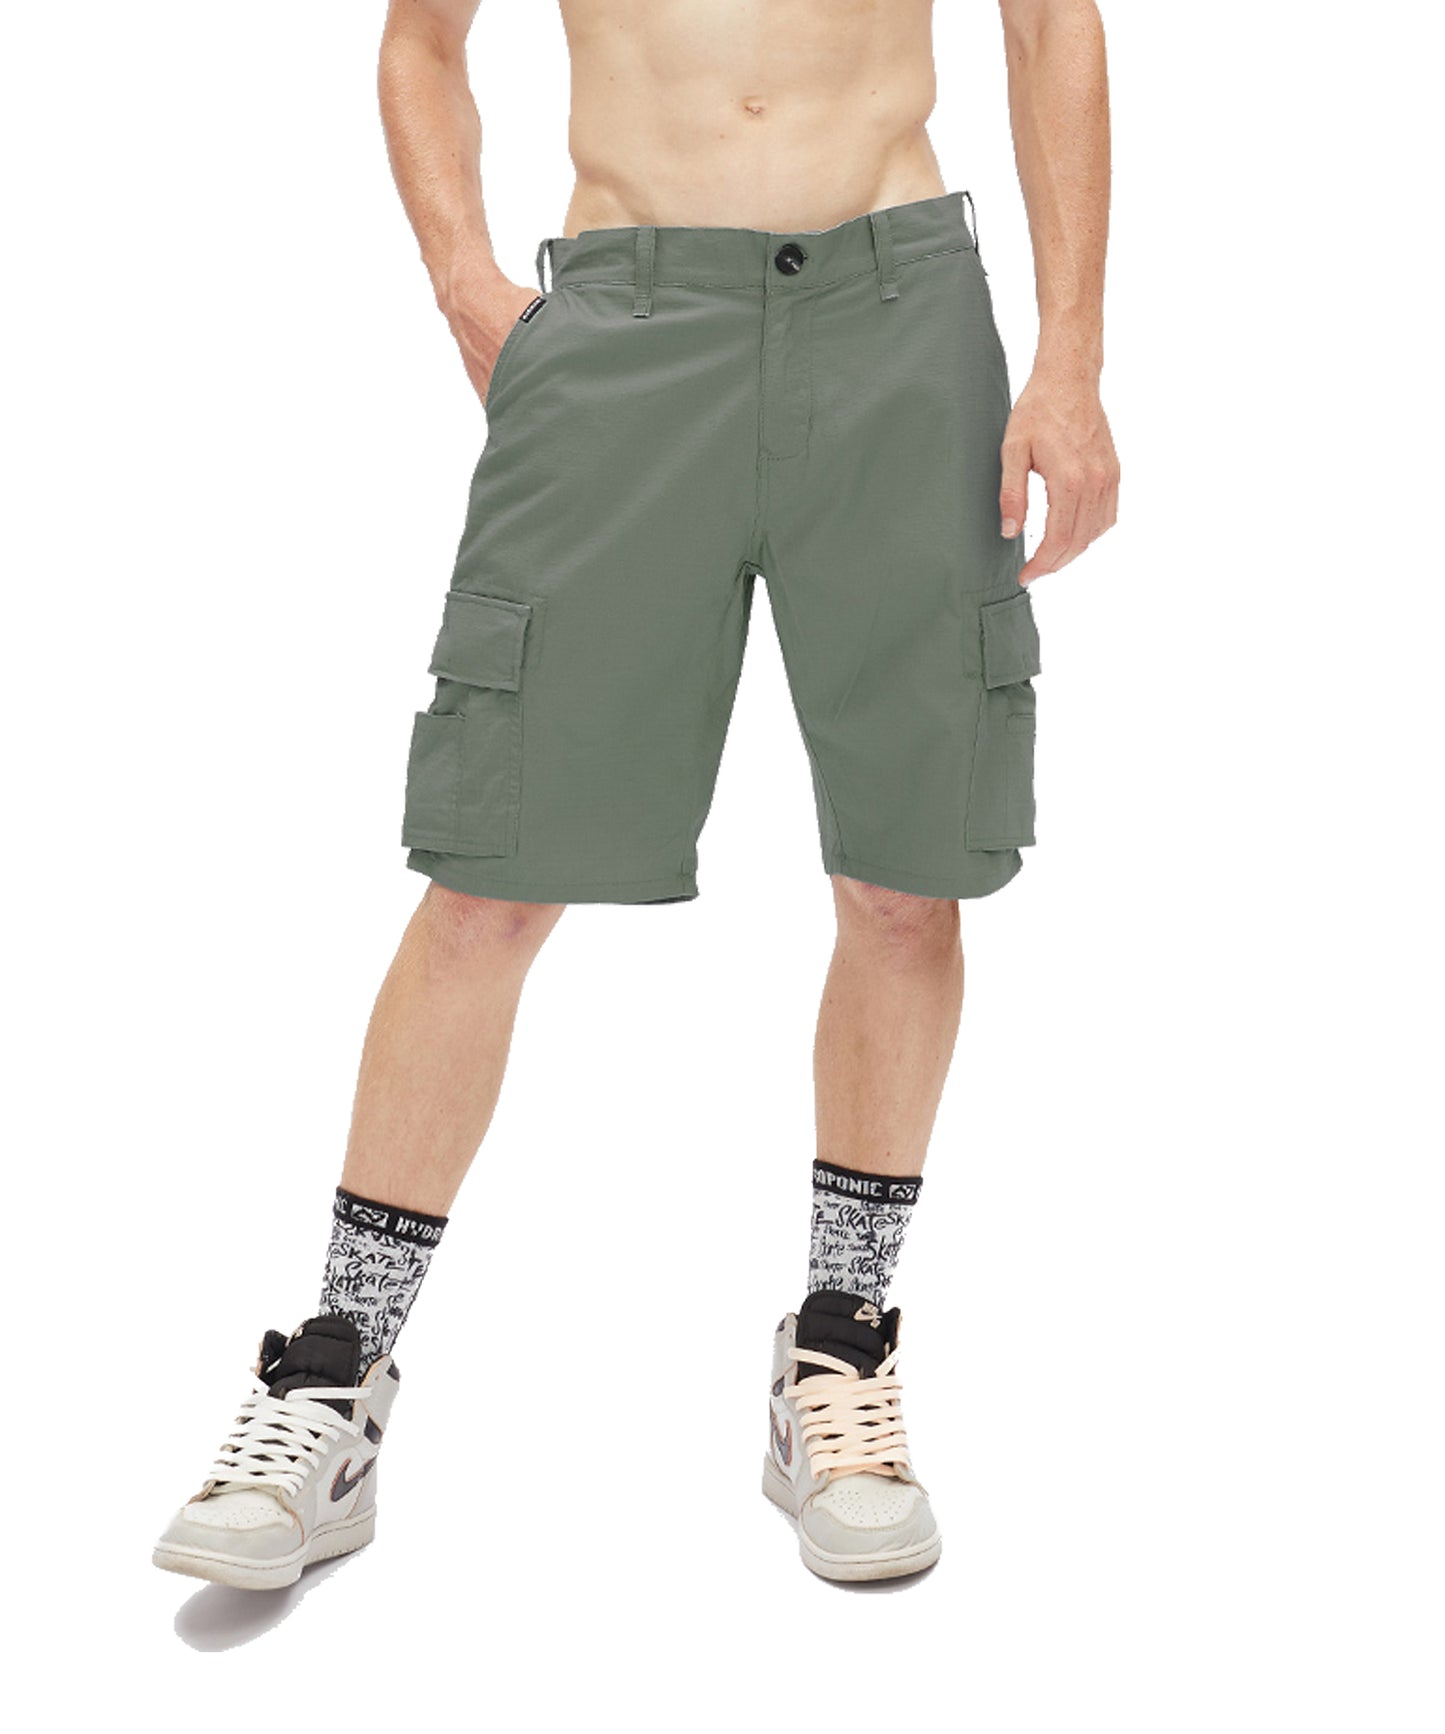 hydroponic-pantalón-shorts-clover-rs-tipo-cargo-varios-bolsillos-color-verde-prenda-lavada